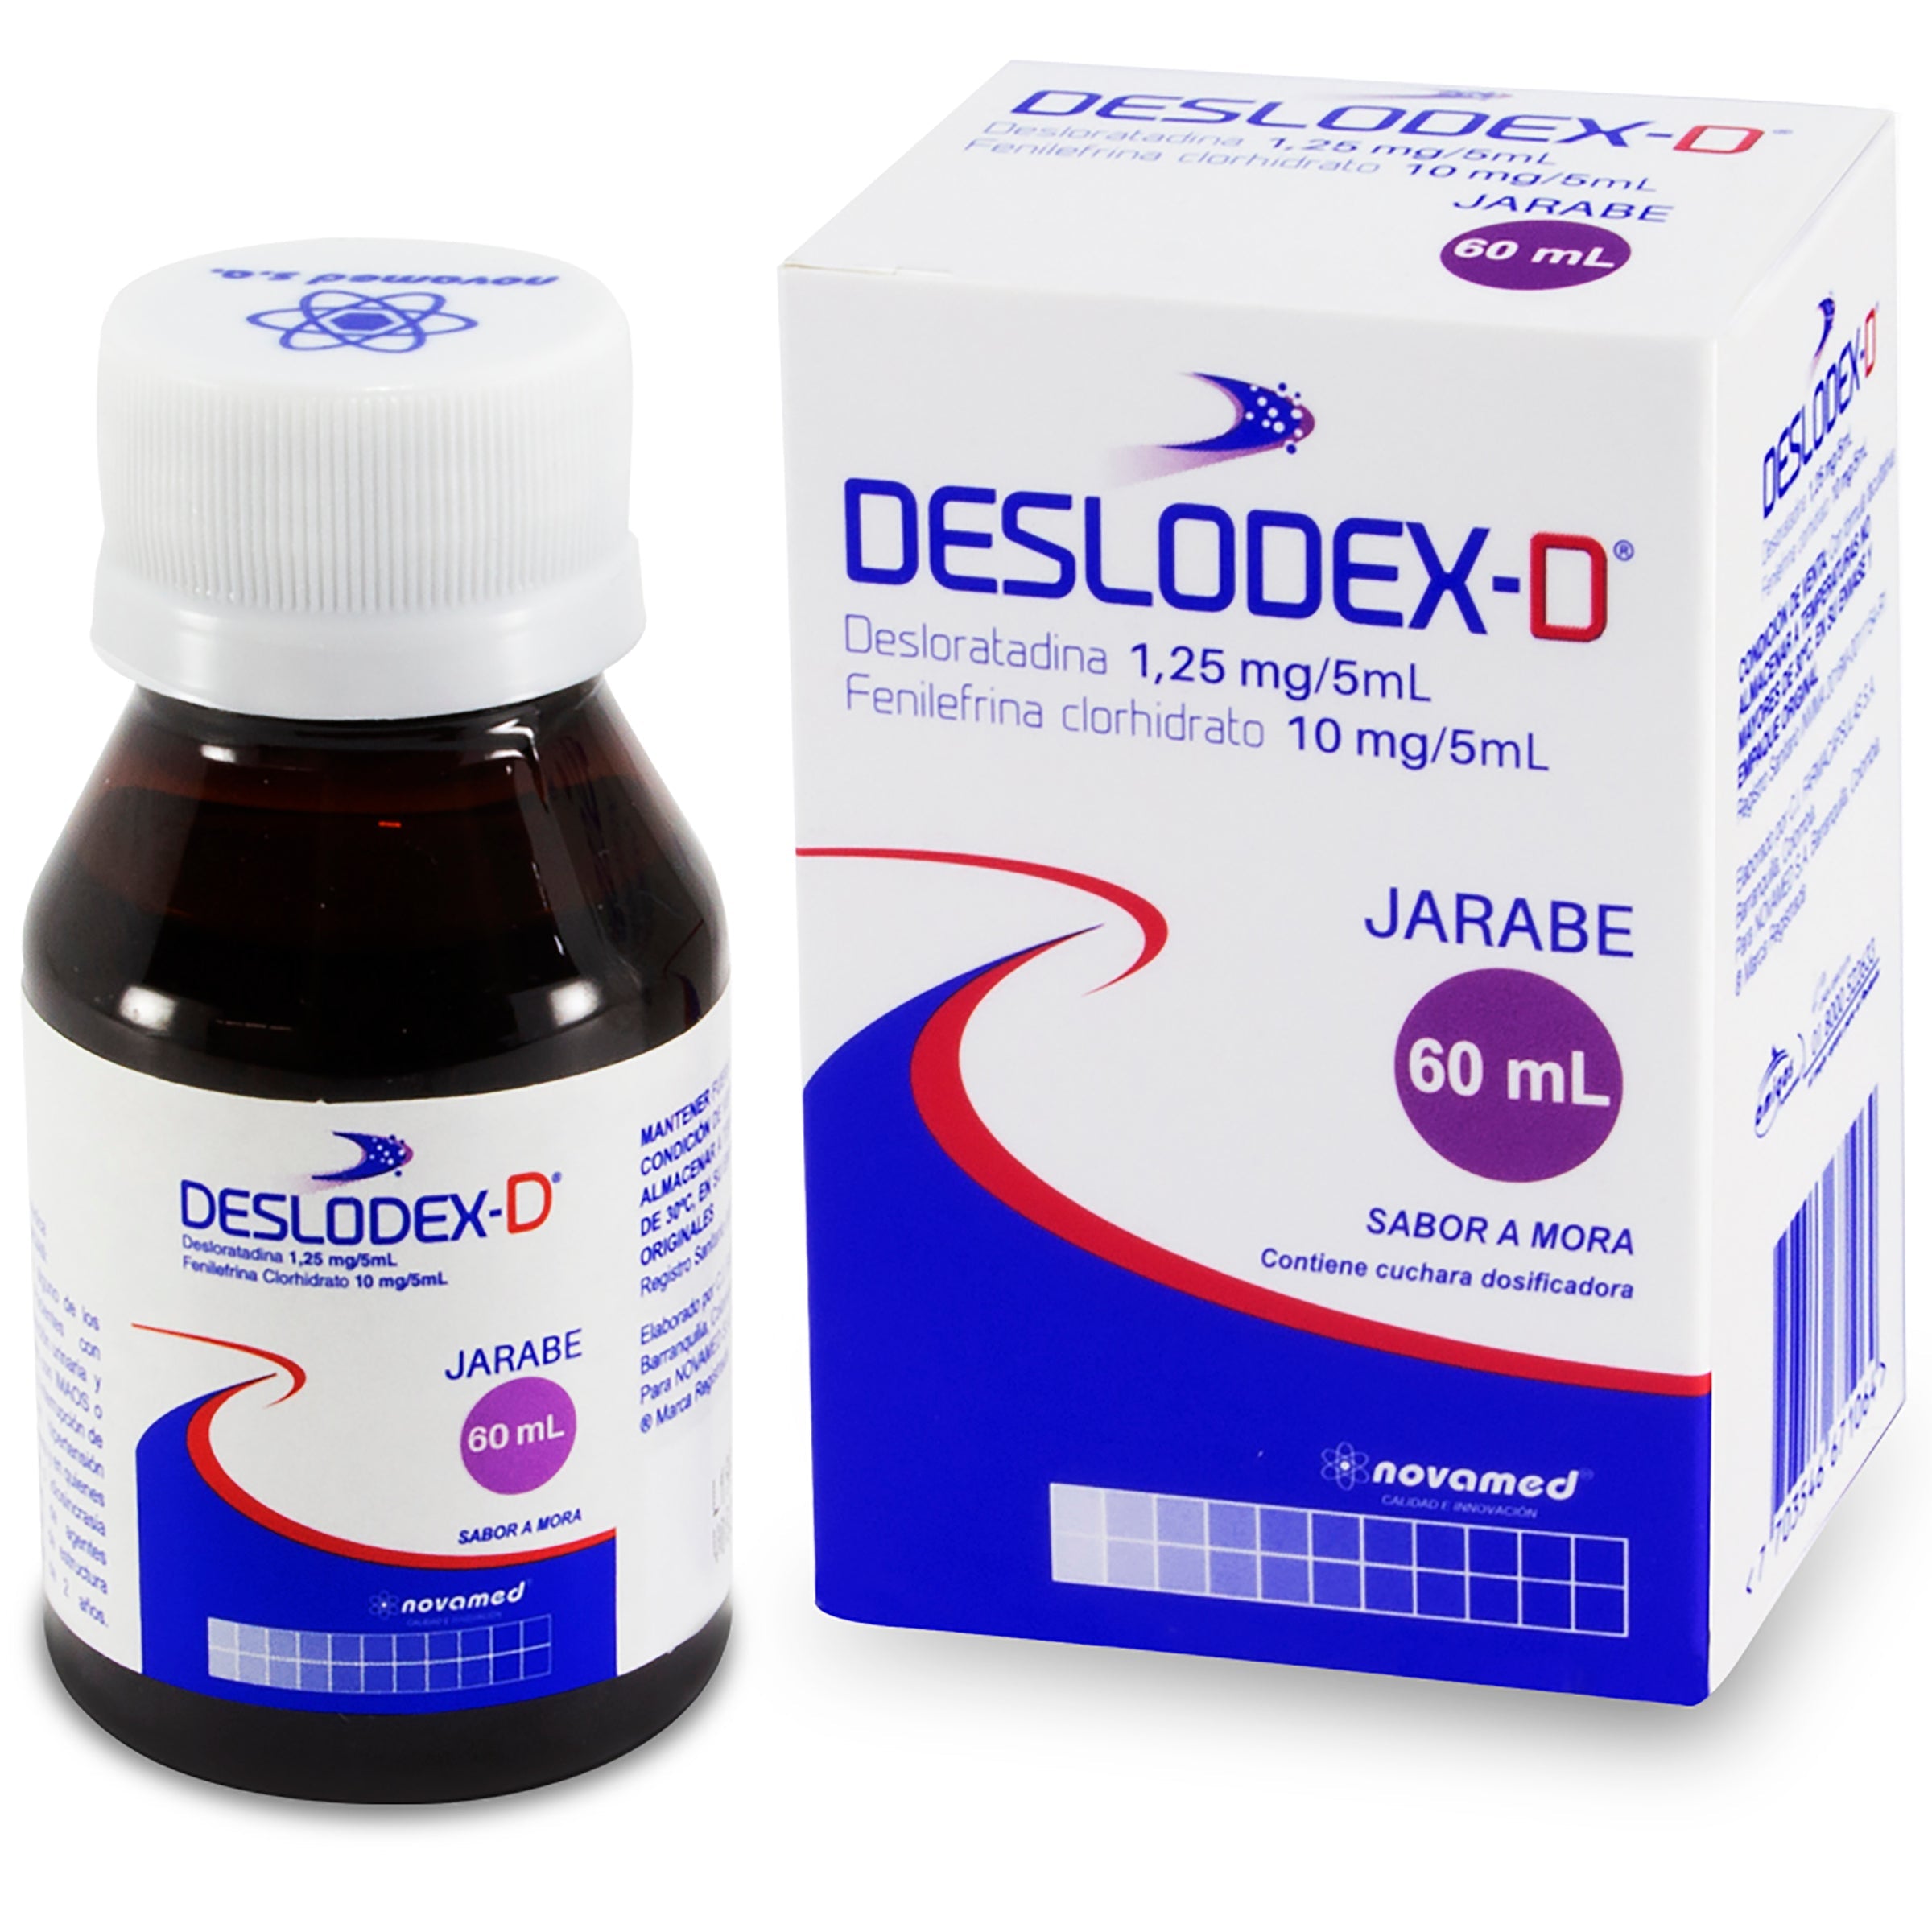 DESLODEX D JARABE 60 ML